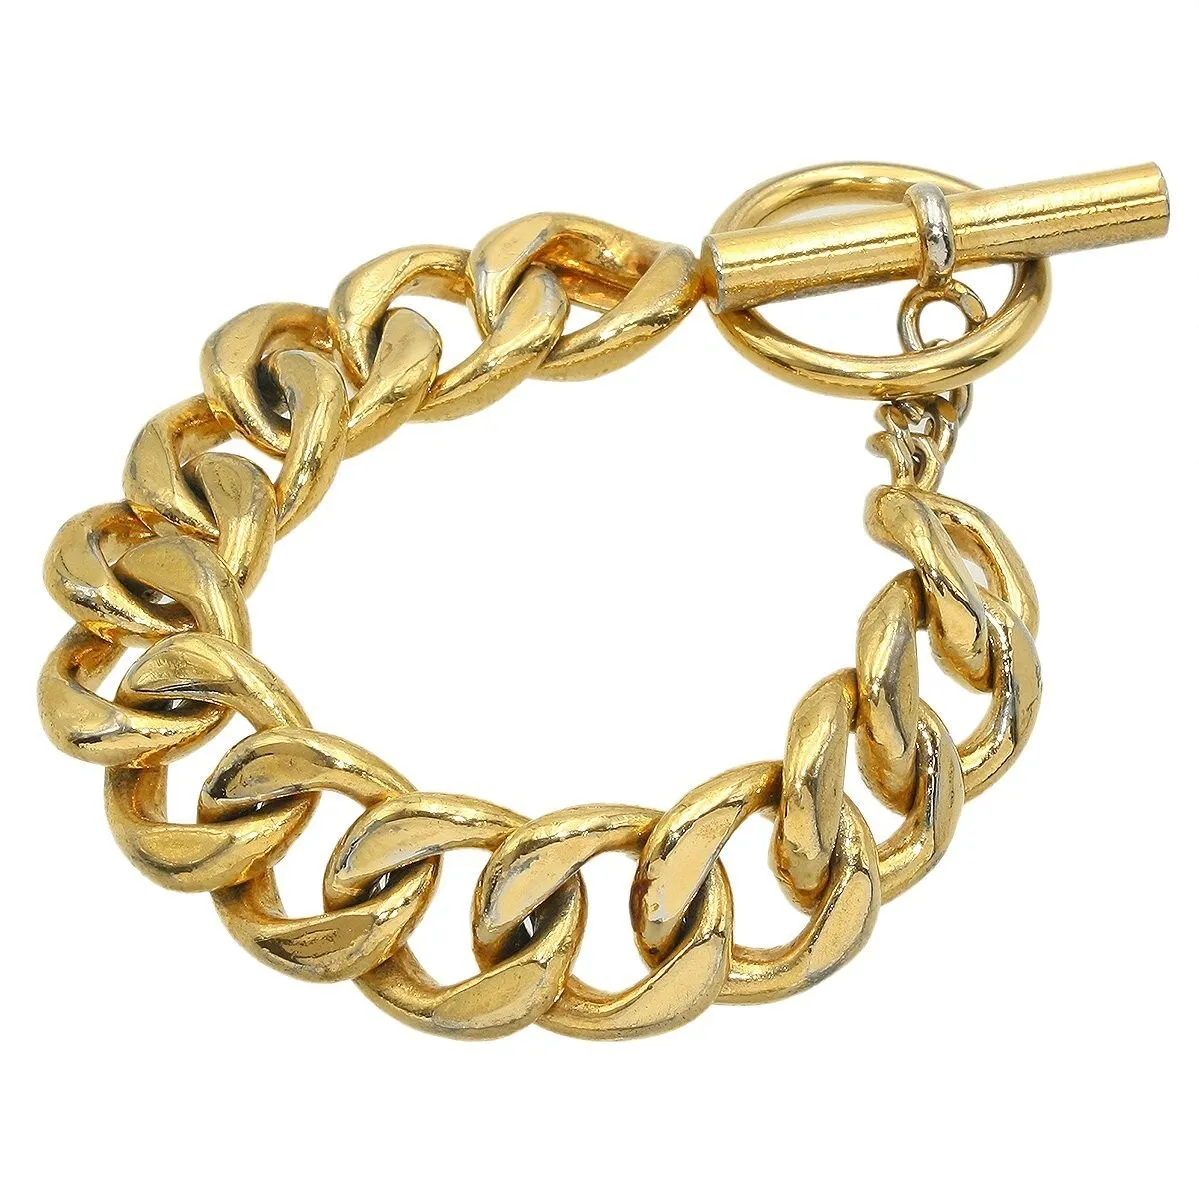 Chanel Bracelets  Chanel jewelry Chanel bracelet Coco chanel fashion